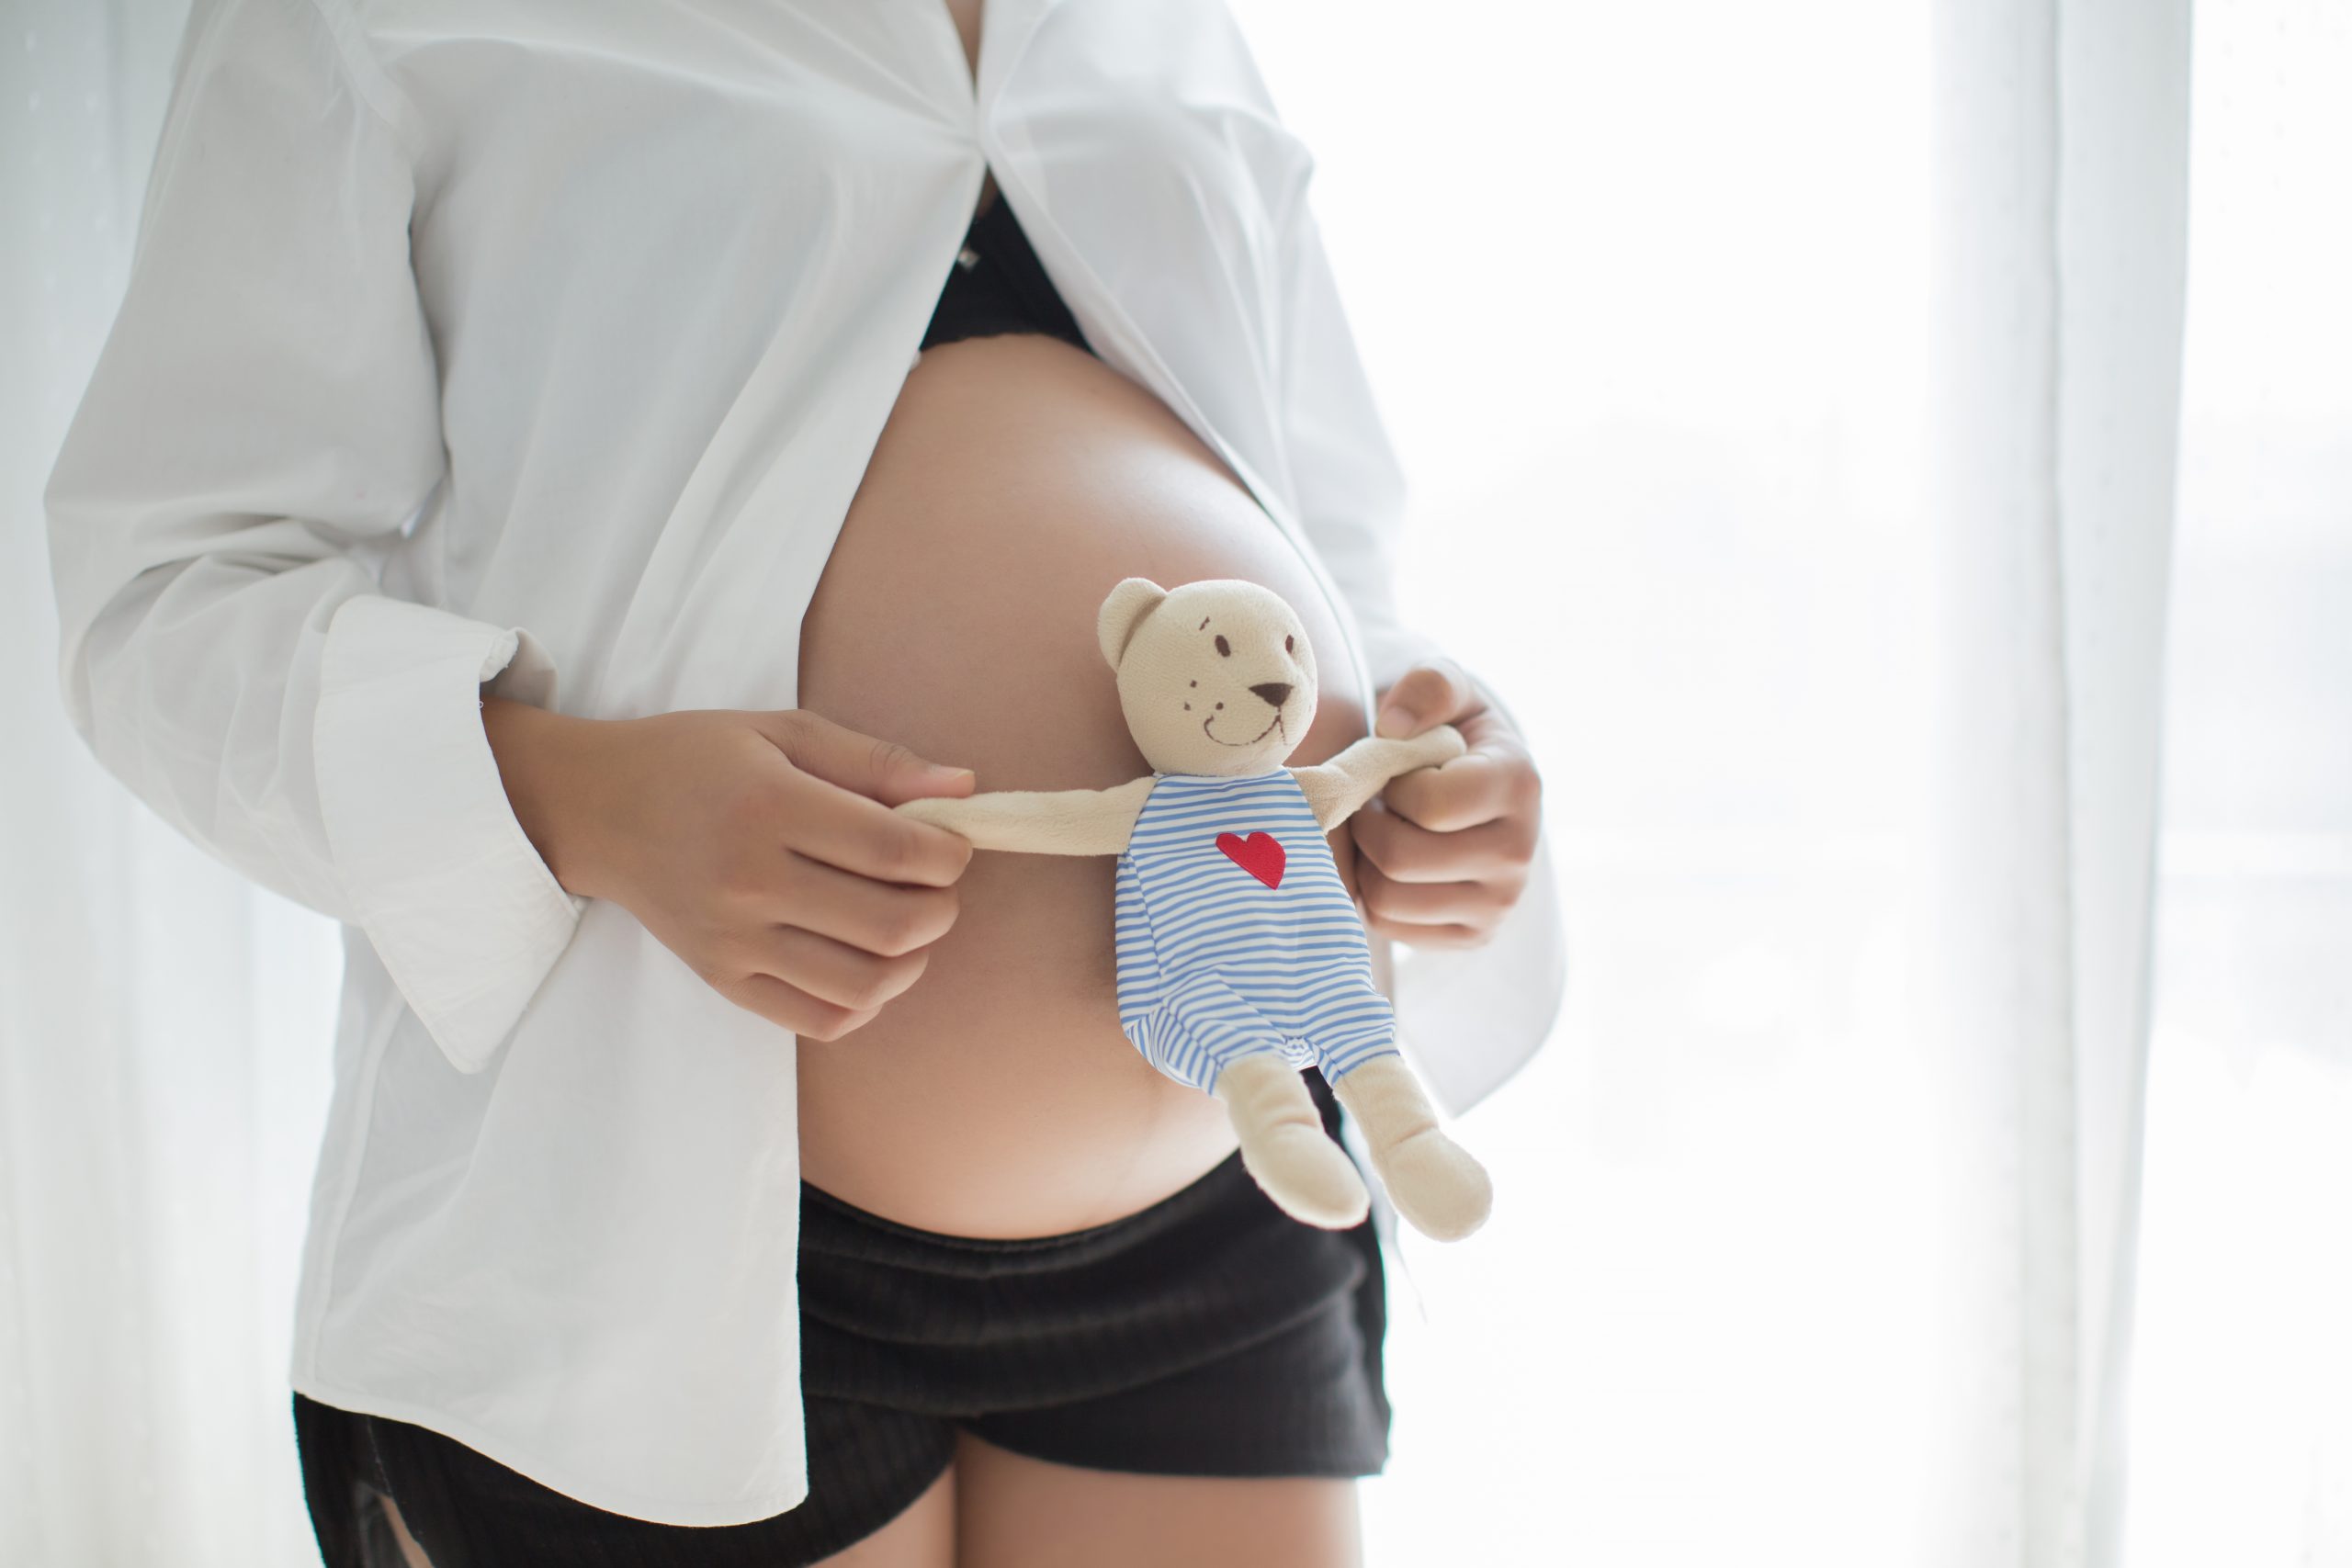 femme enceinte ostéopathe charpentier vence juan-les-pins grossesse